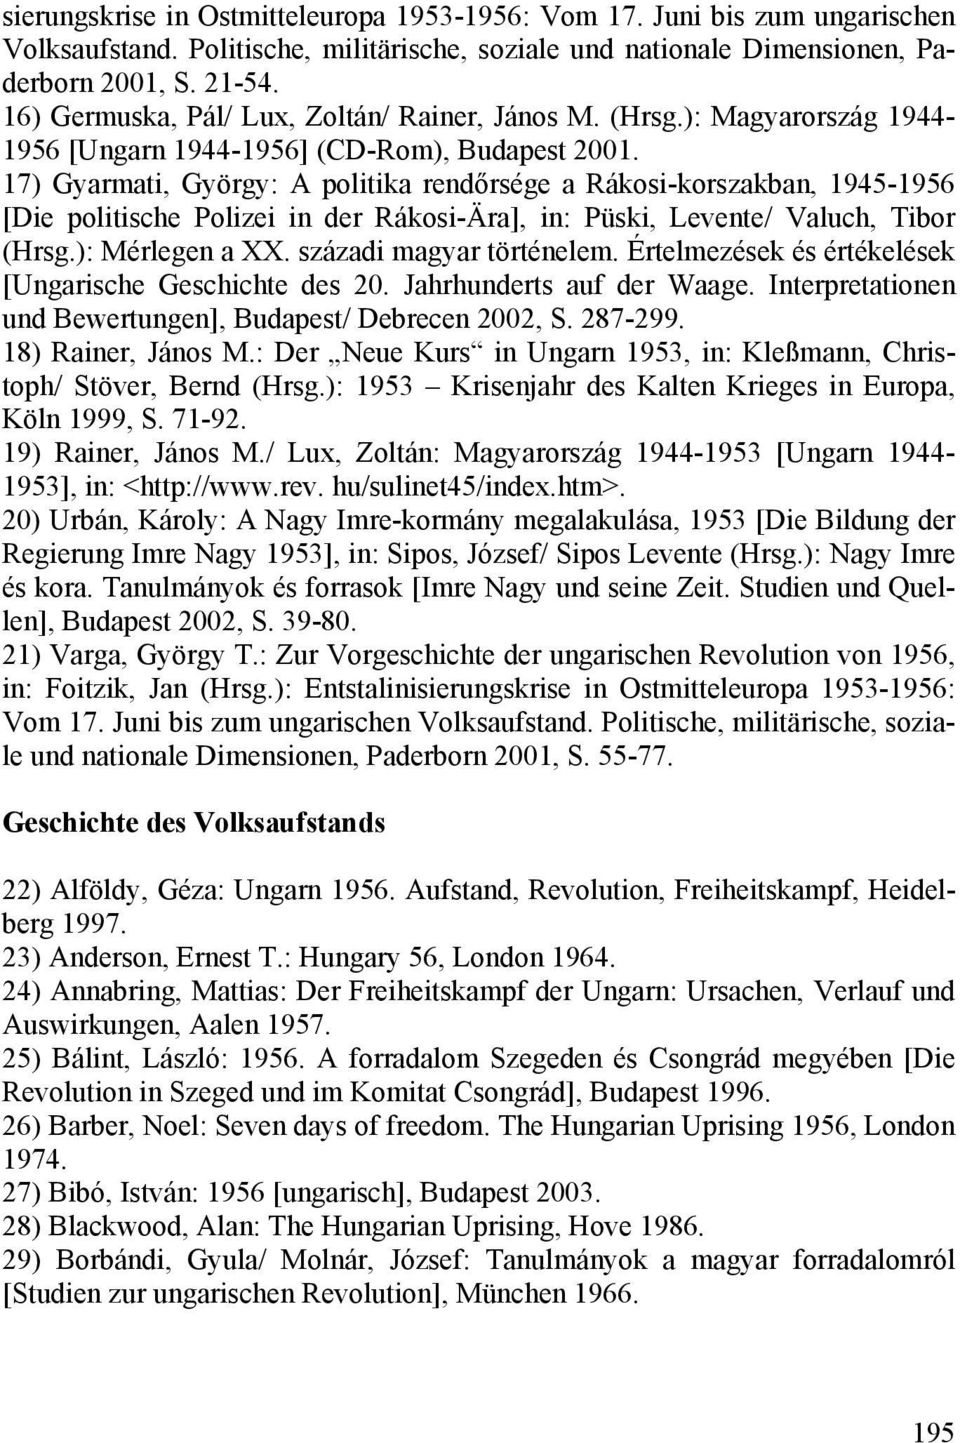 17) Gyarmati, György: A politika rendőrsége a Rákosi-korszakban, 1945-1956 [Die politische Polizei in der Rákosi-Ära], in: Püski, Levente/ Valuch, Tibor (Hrsg.): Mérlegen a XX.